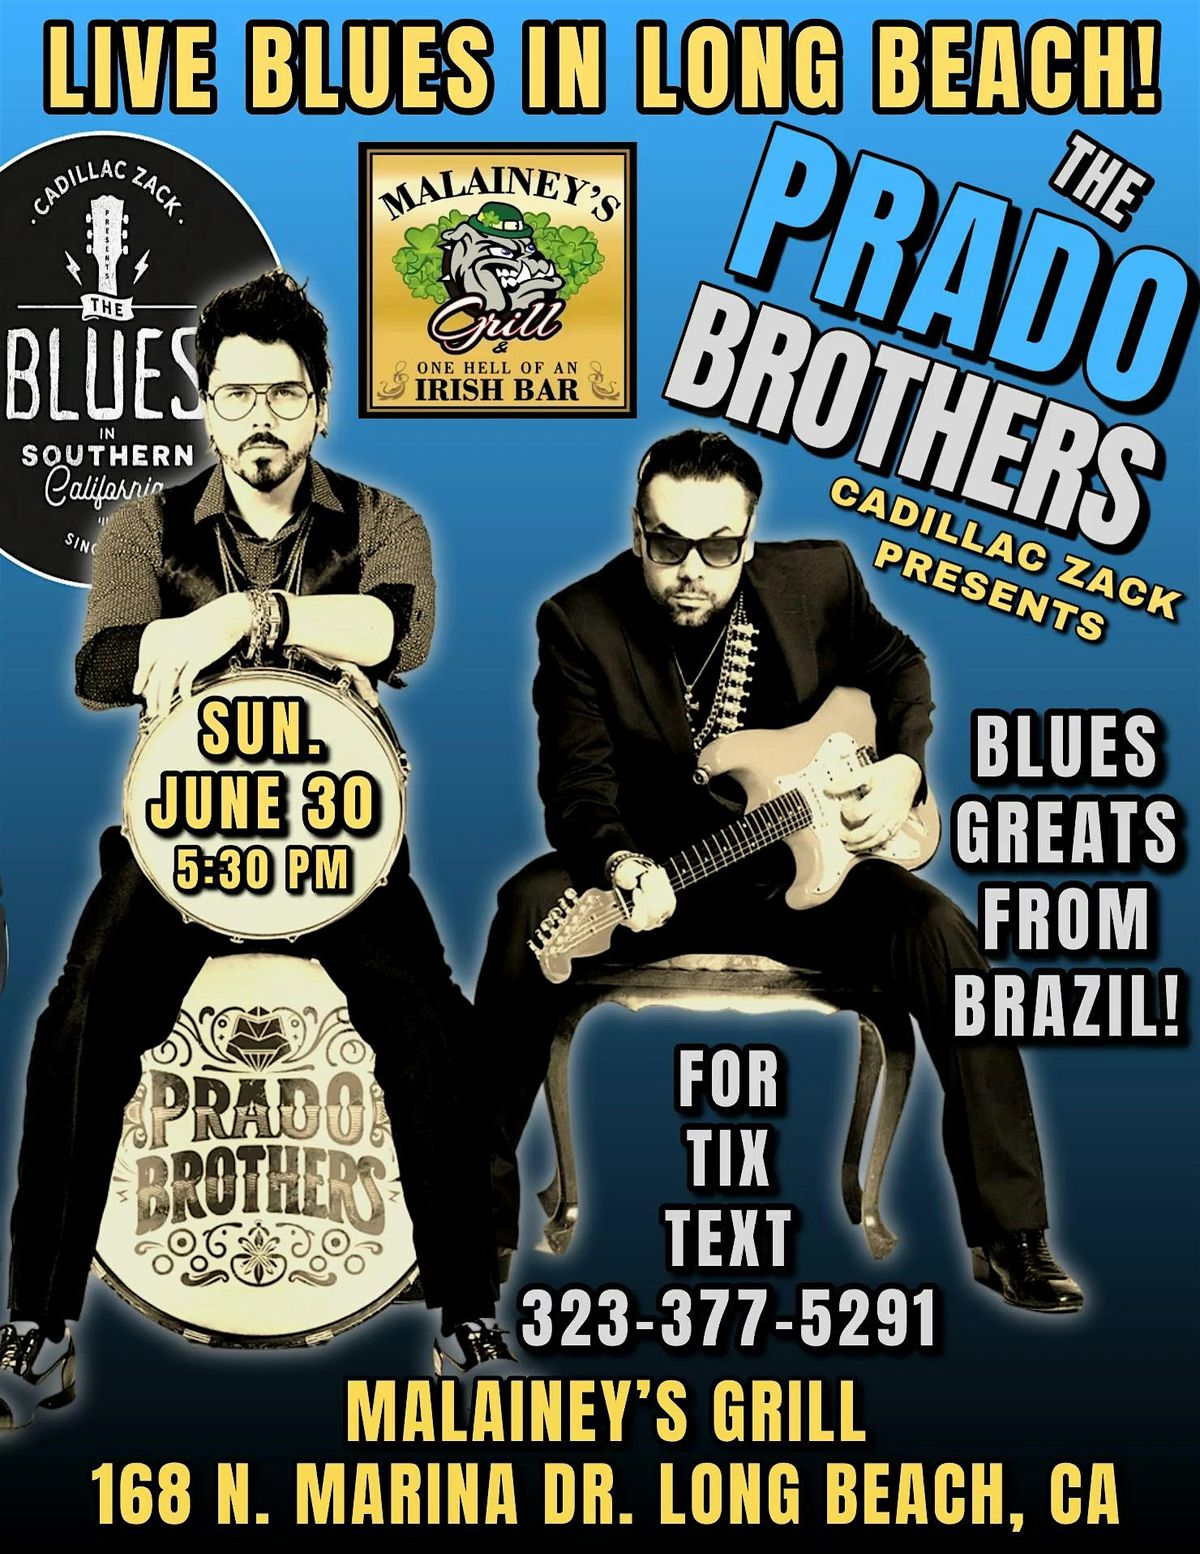 Igor Prado - Blues Guitar Master from Brazil - in Long Beach!